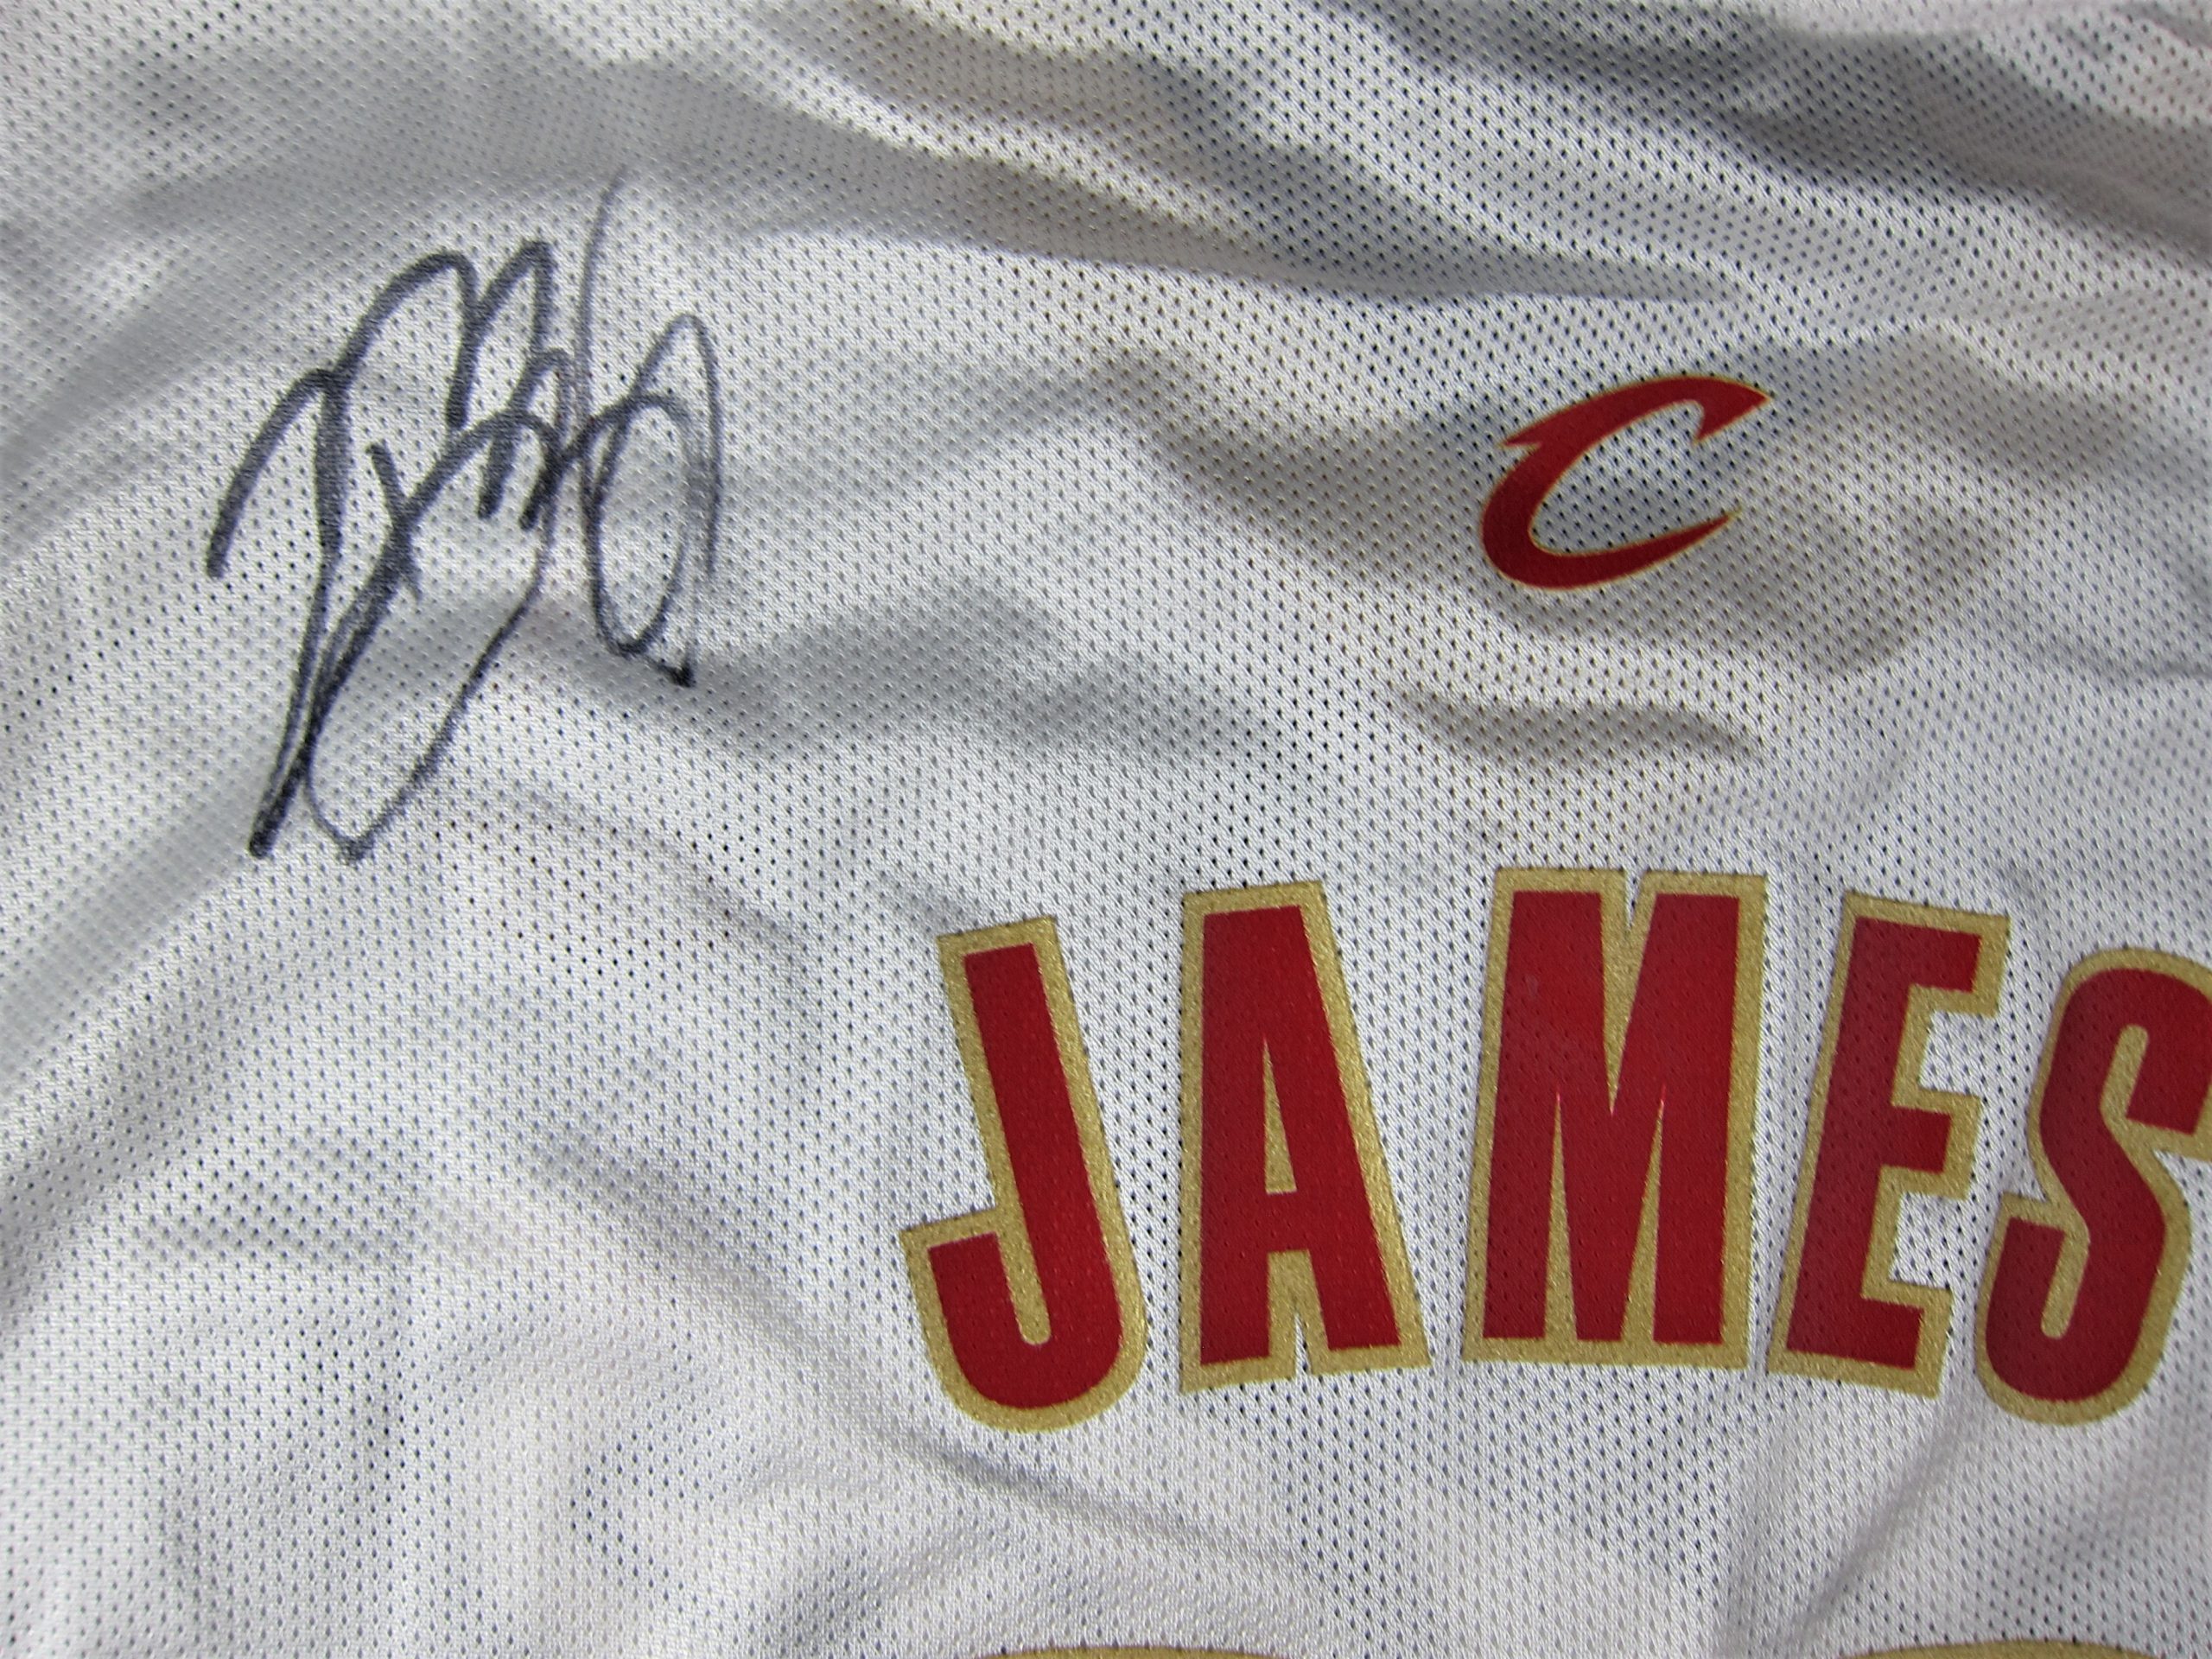 LeBron James signed jersey.